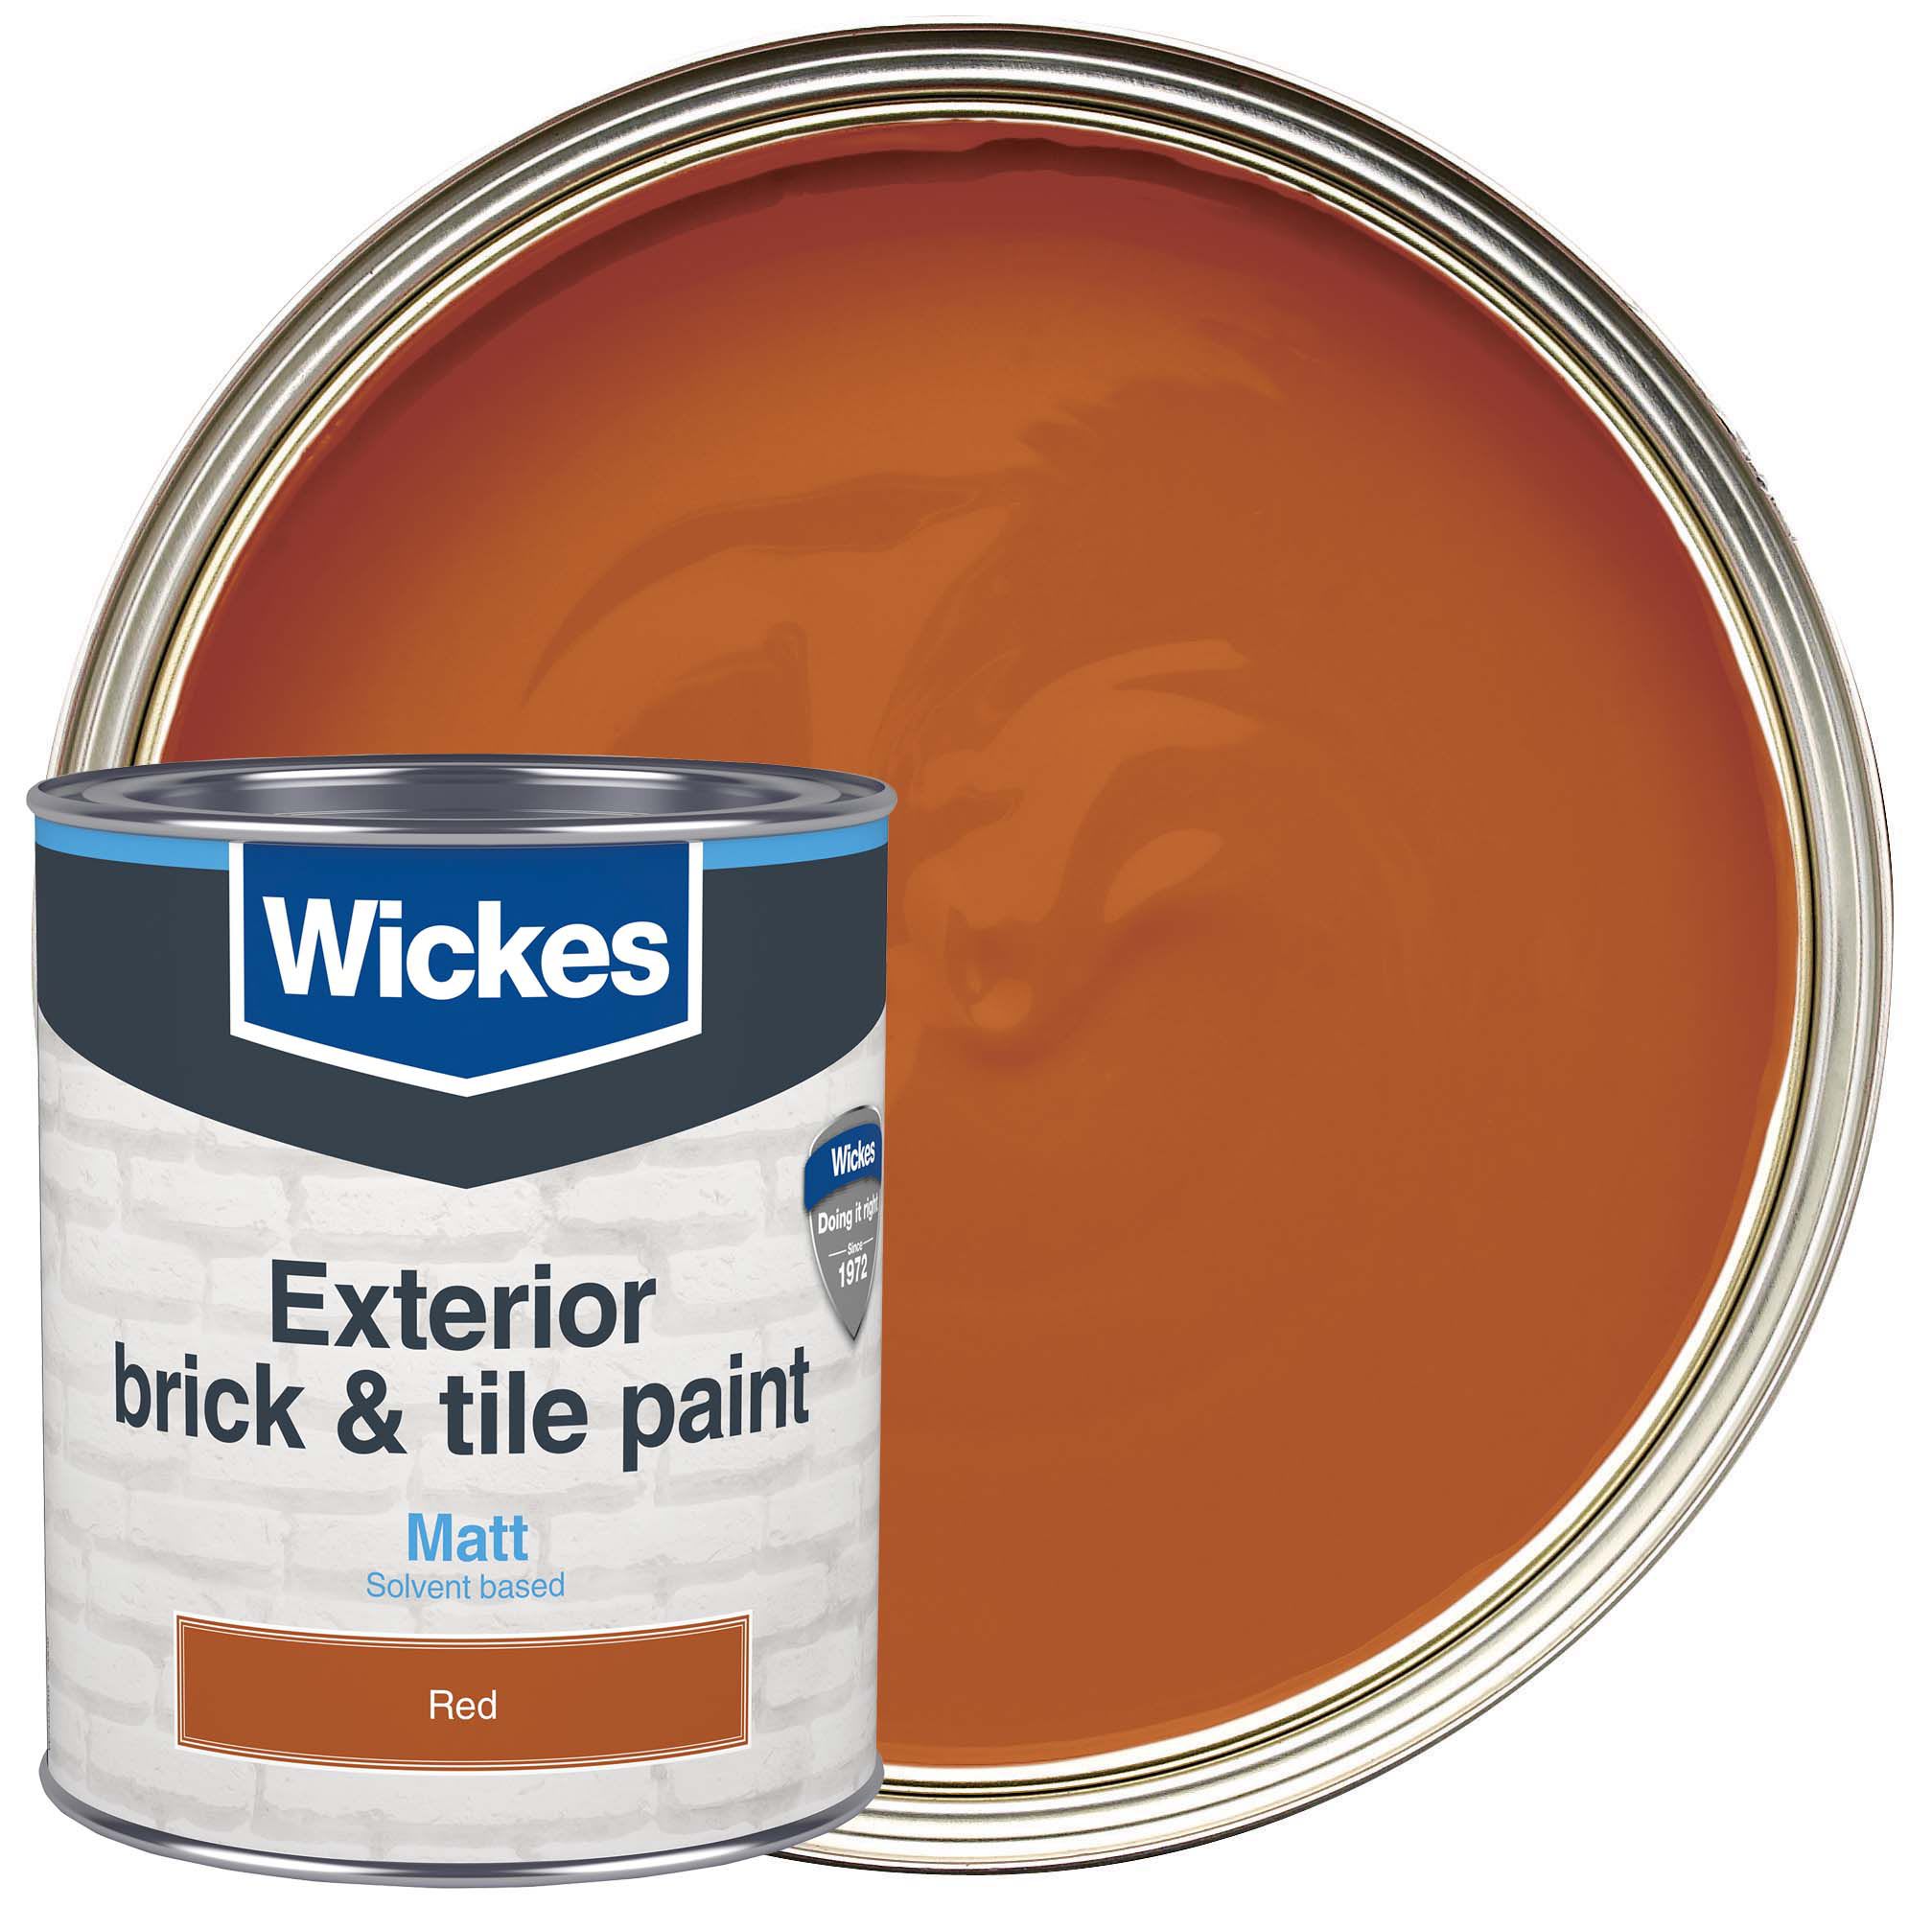 Wickes Brick & Tile Matt Paint - Red